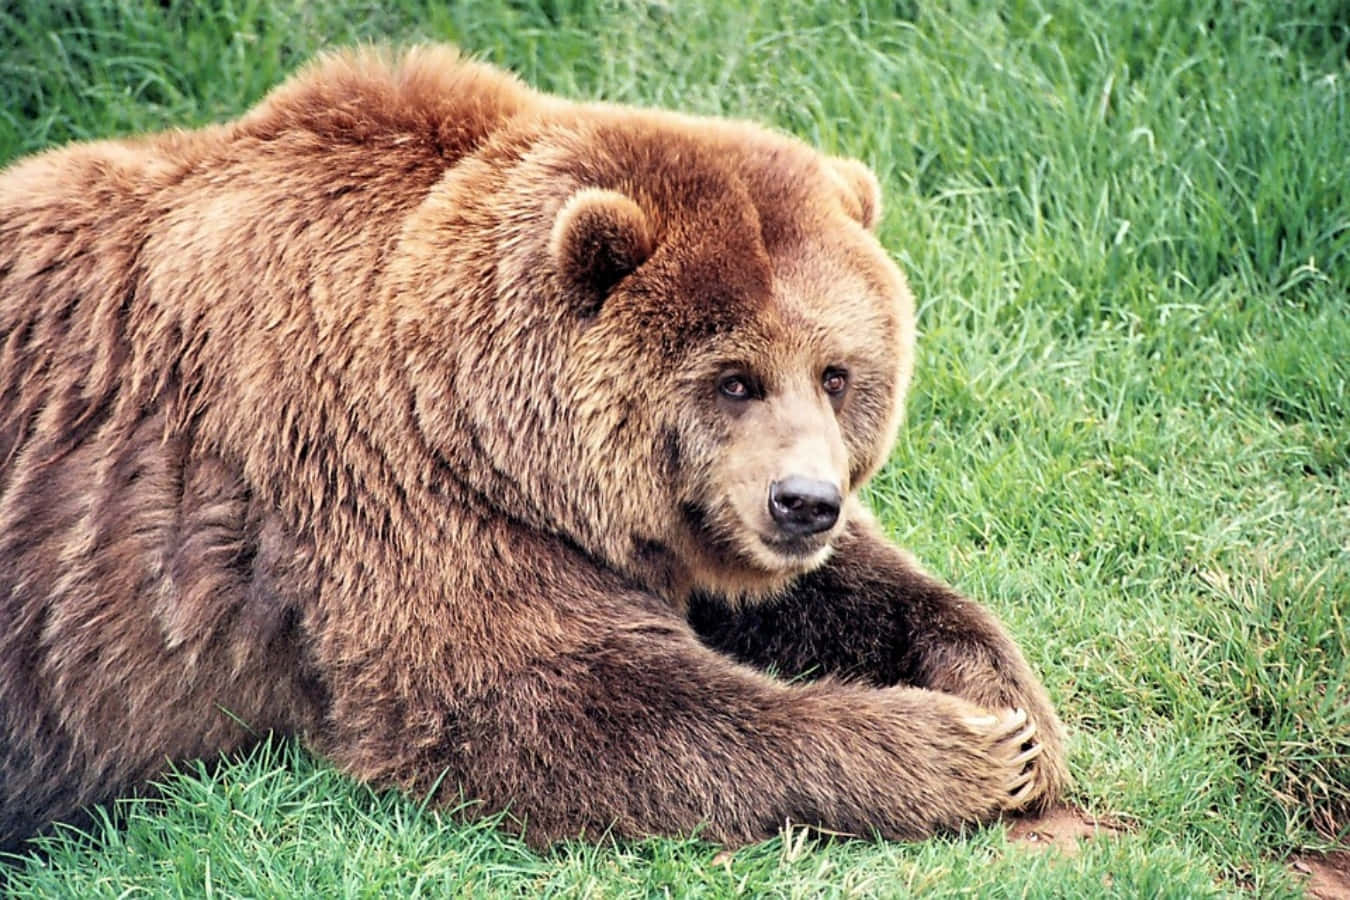 An adorable Brown Bear in its natural habitat